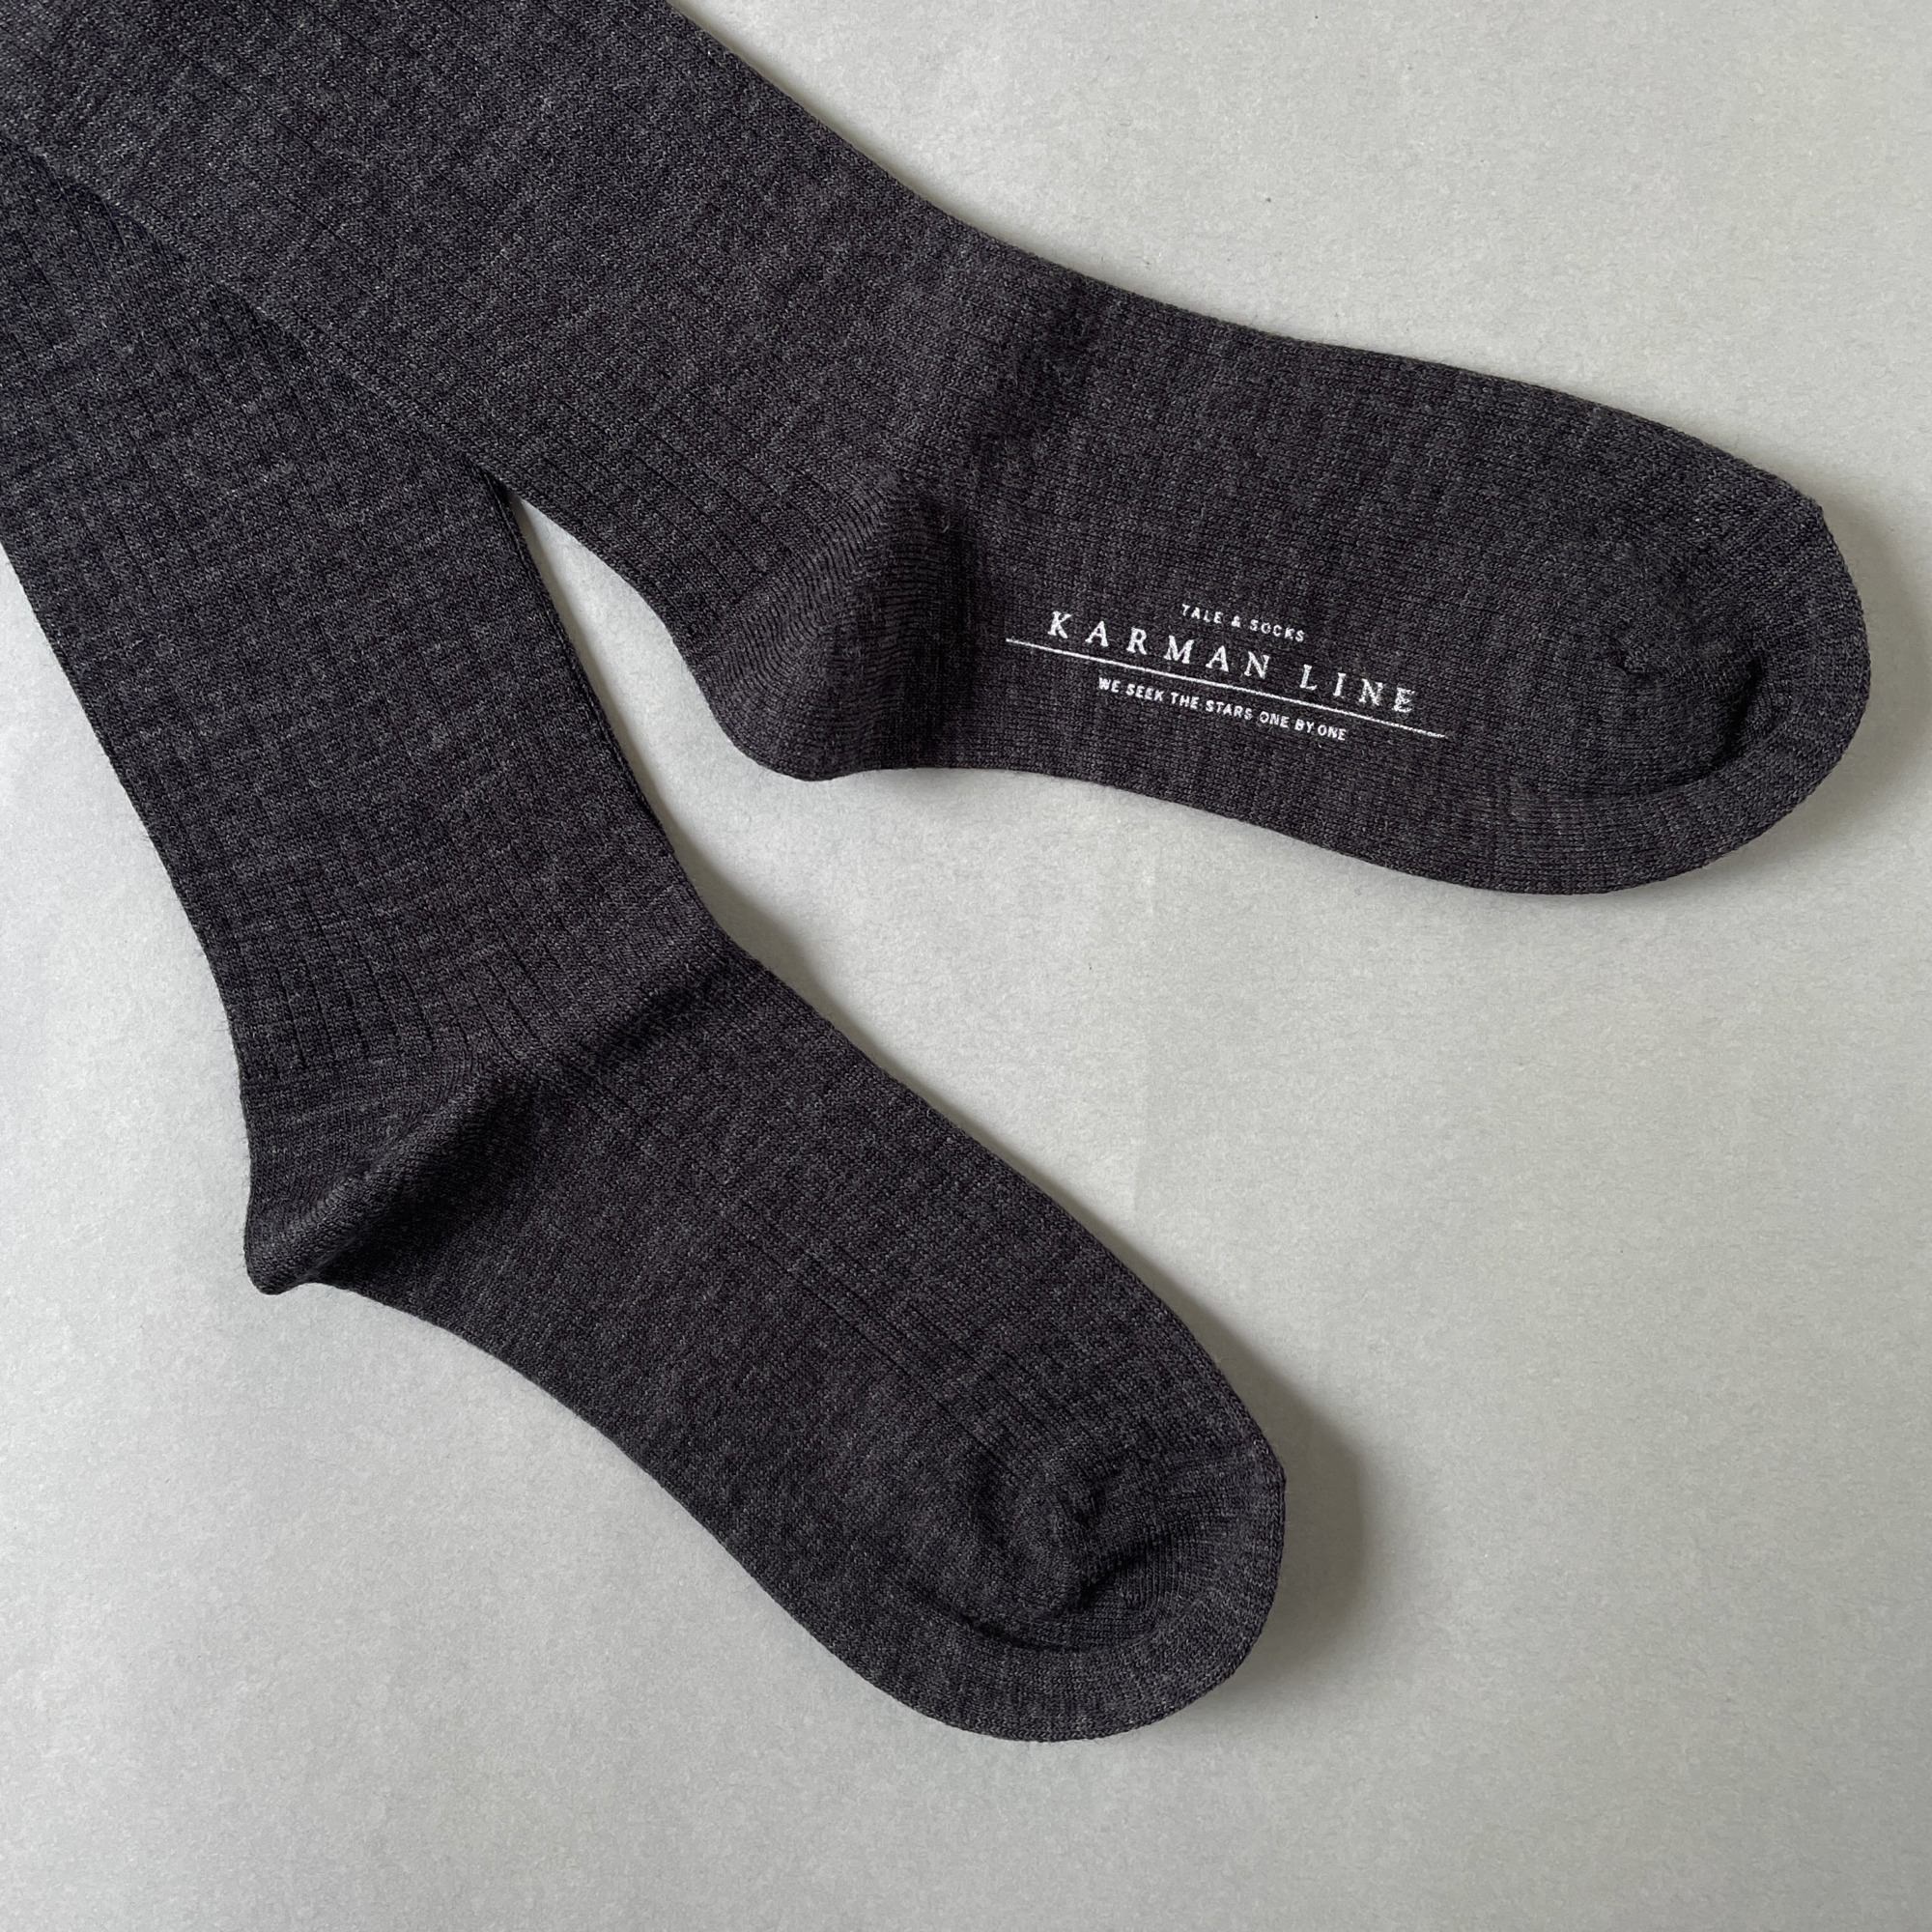 KARMAN LINE VIRGO / Knee high socks / Charcoal